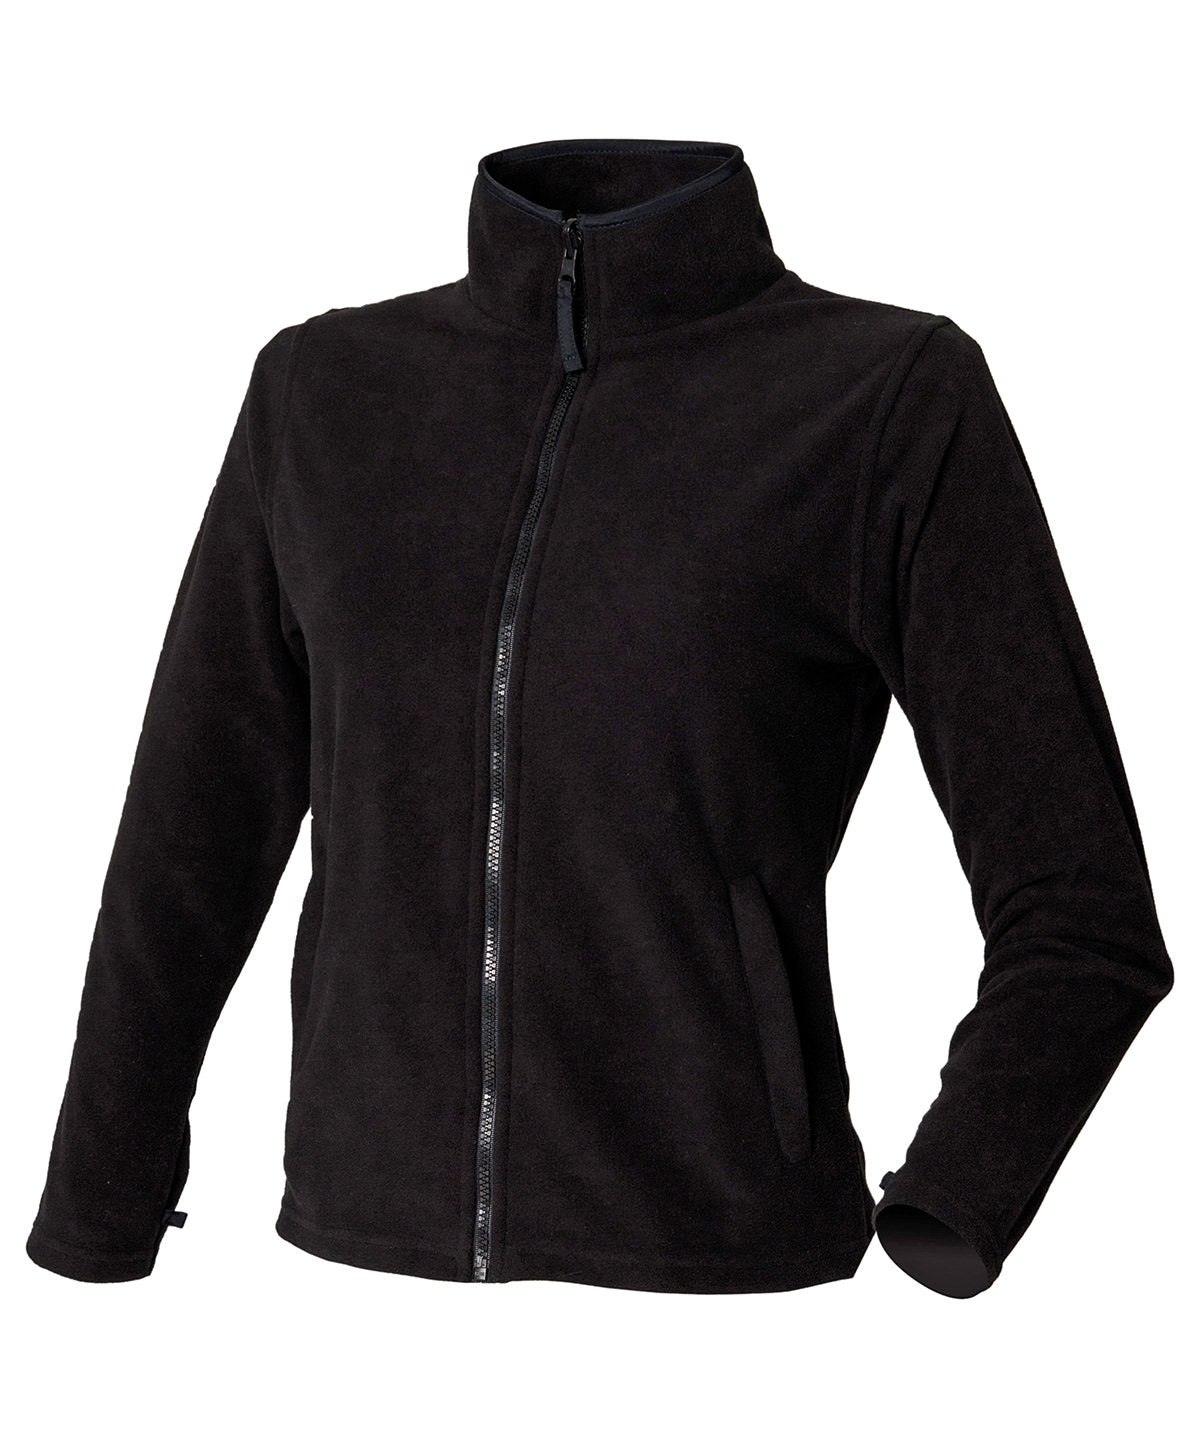 Personalised Jackets - Black Henbury Women's microfleece jacket